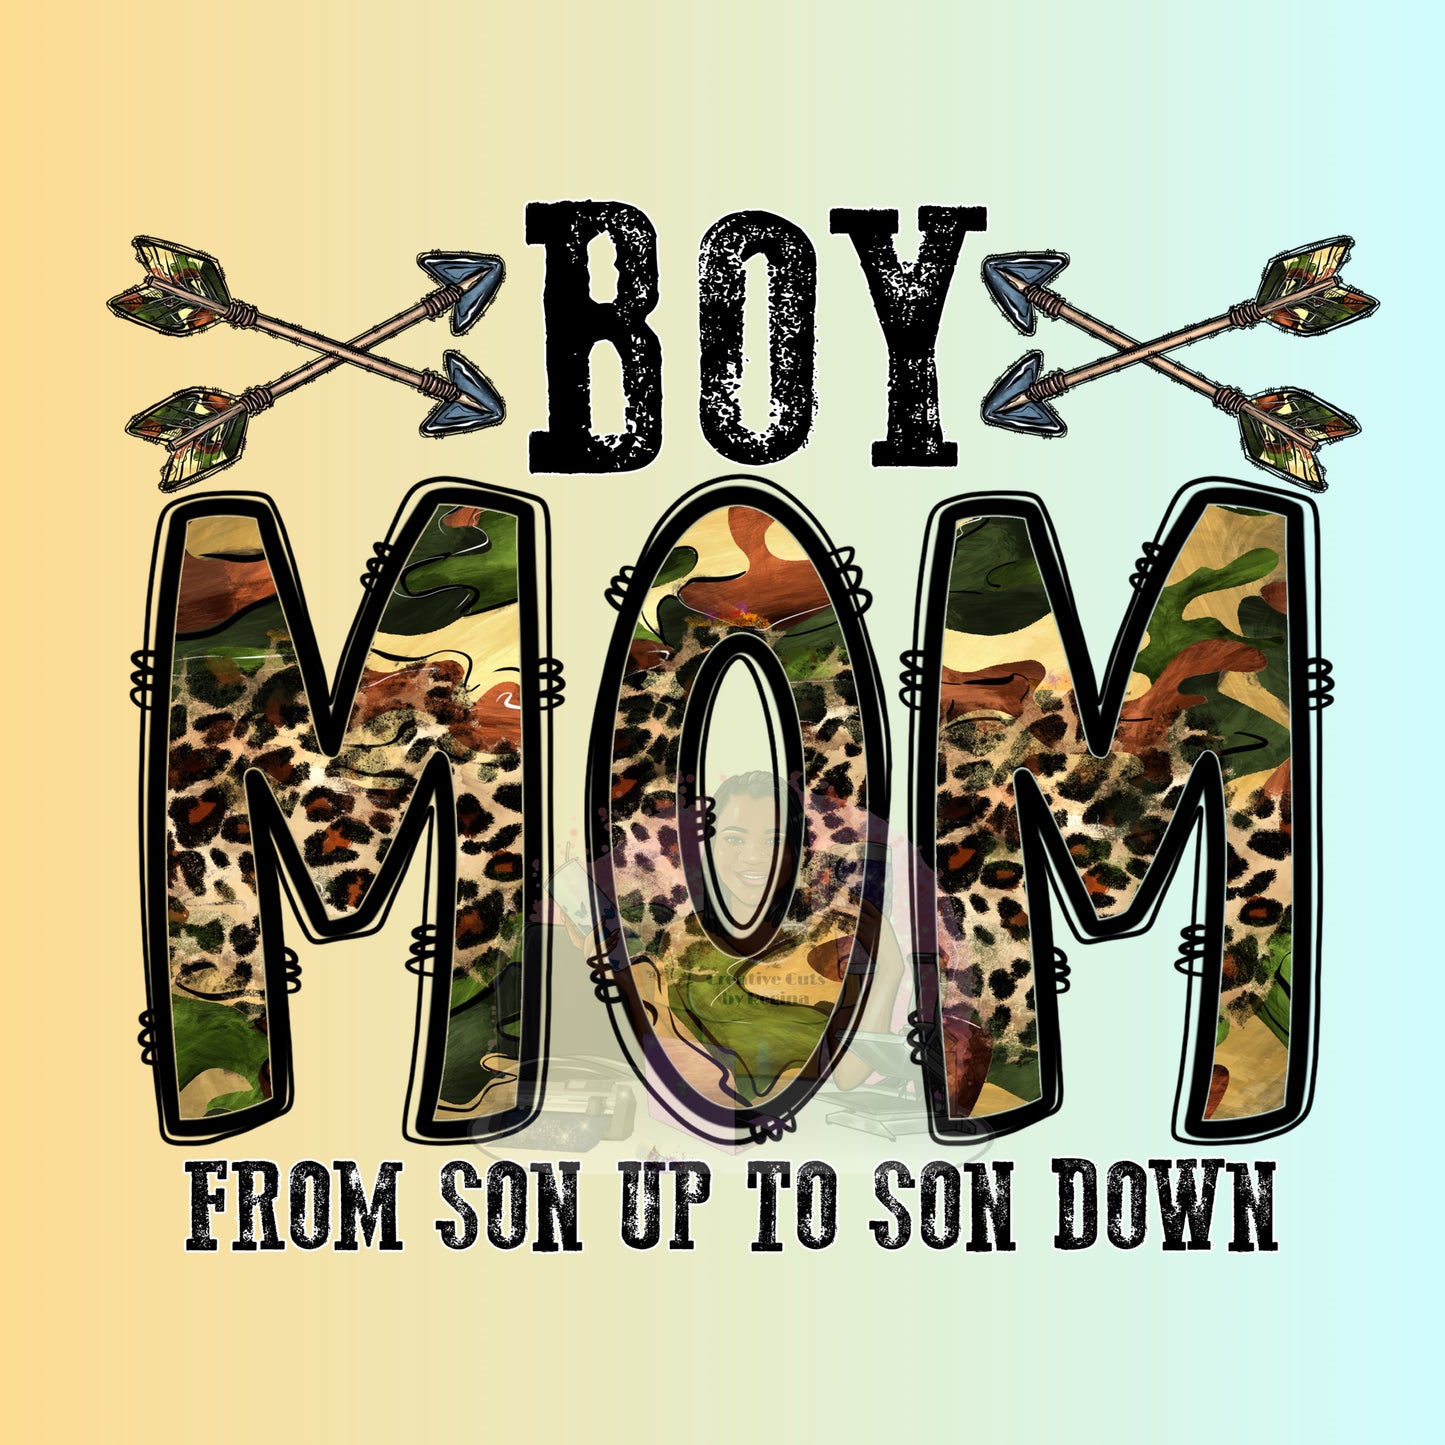 Boy Mom